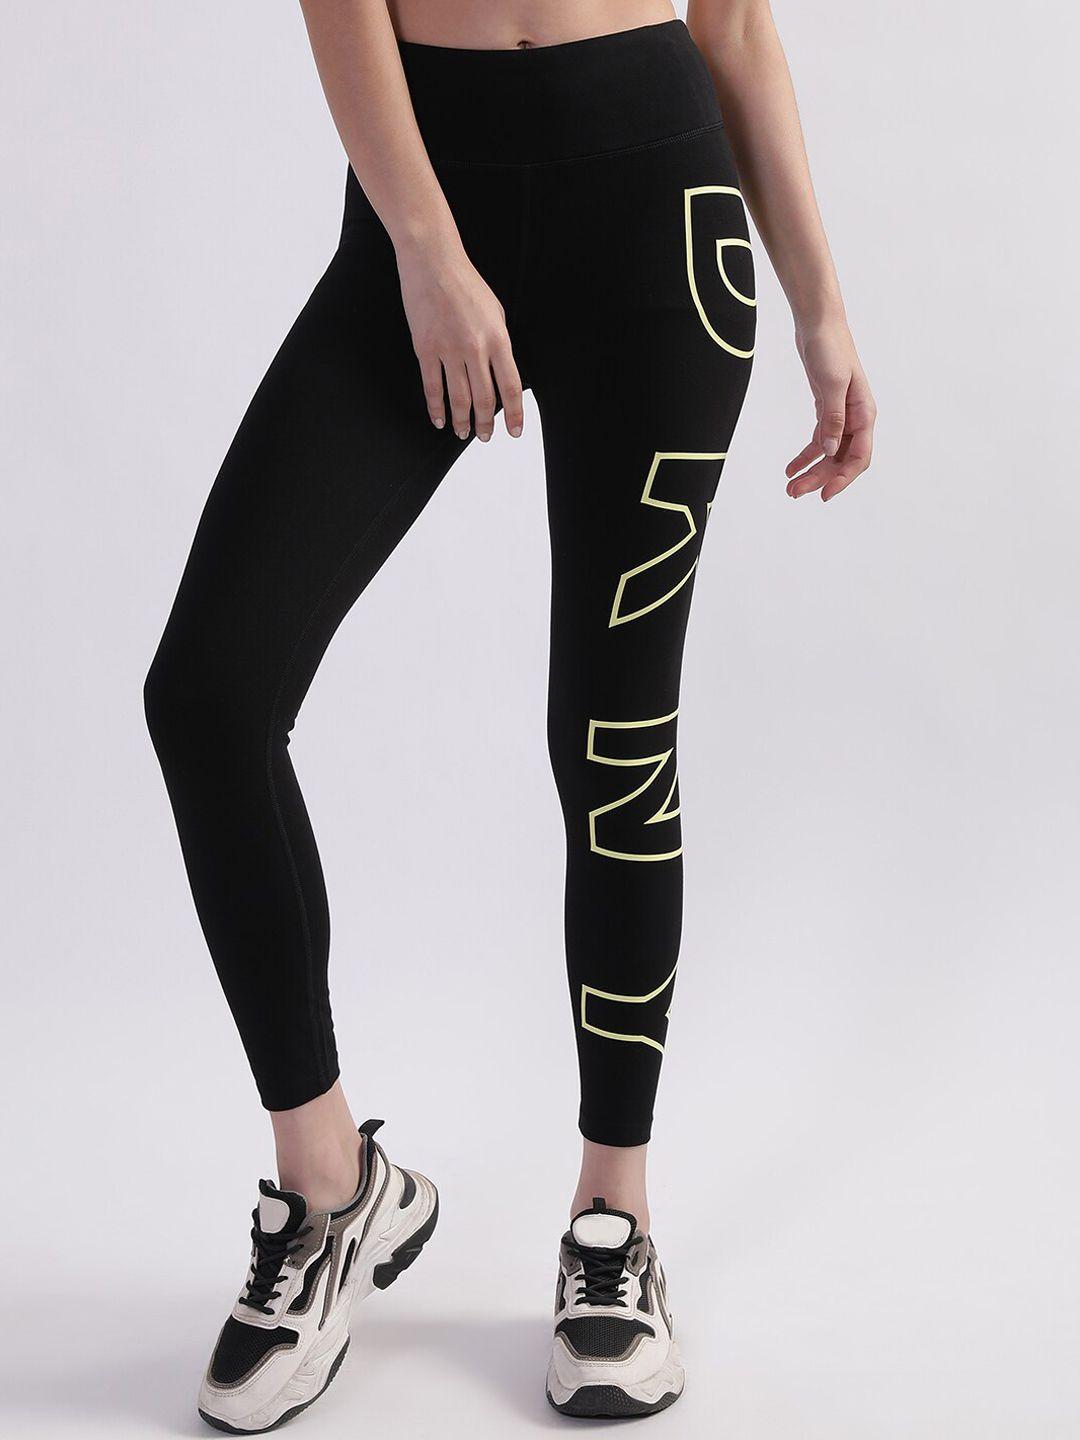 dkny high waist brand logo printed tights